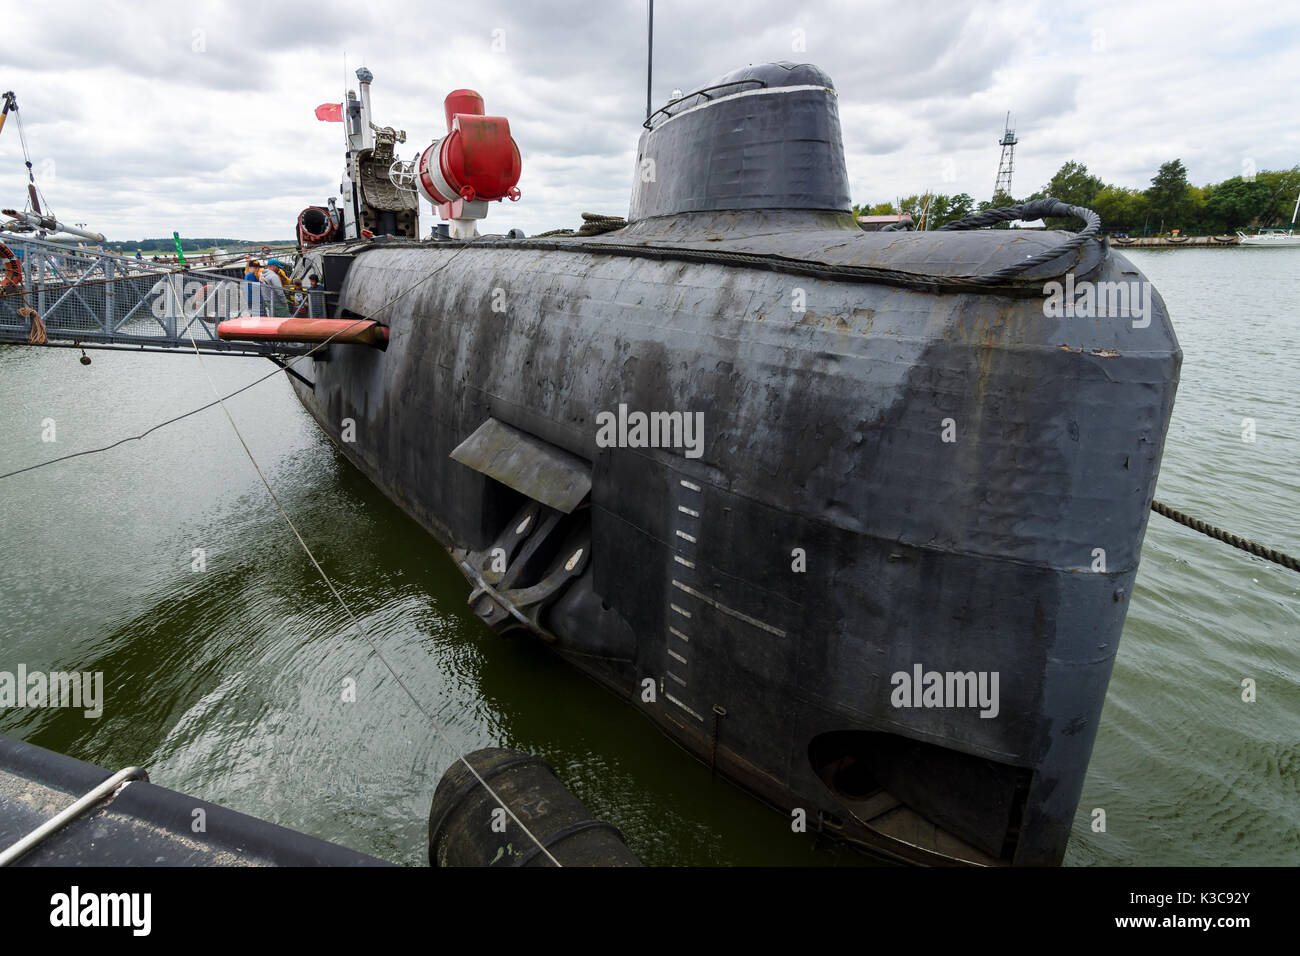 PEENEMUENDE, GERMANY - JULY 18, 2017: The Peenemuende seaport on the Baltic Sea island of Usedom and the Soviet Juliett-class submarine K-24 (U461). Stock Photo